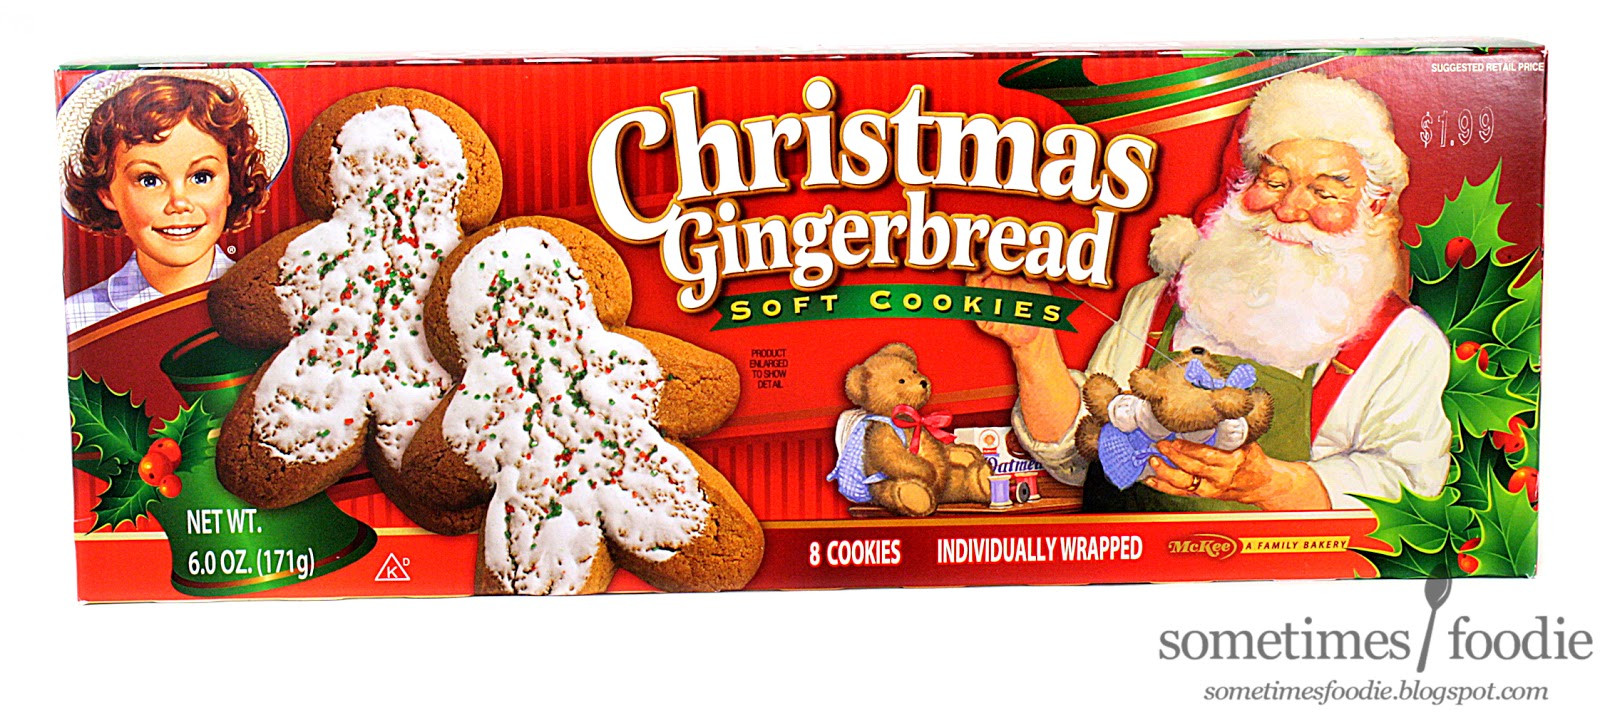 Walmart Christmas Cookies
 Sometimes Foo Christmas Gingerbread Soft Cookies Walmart